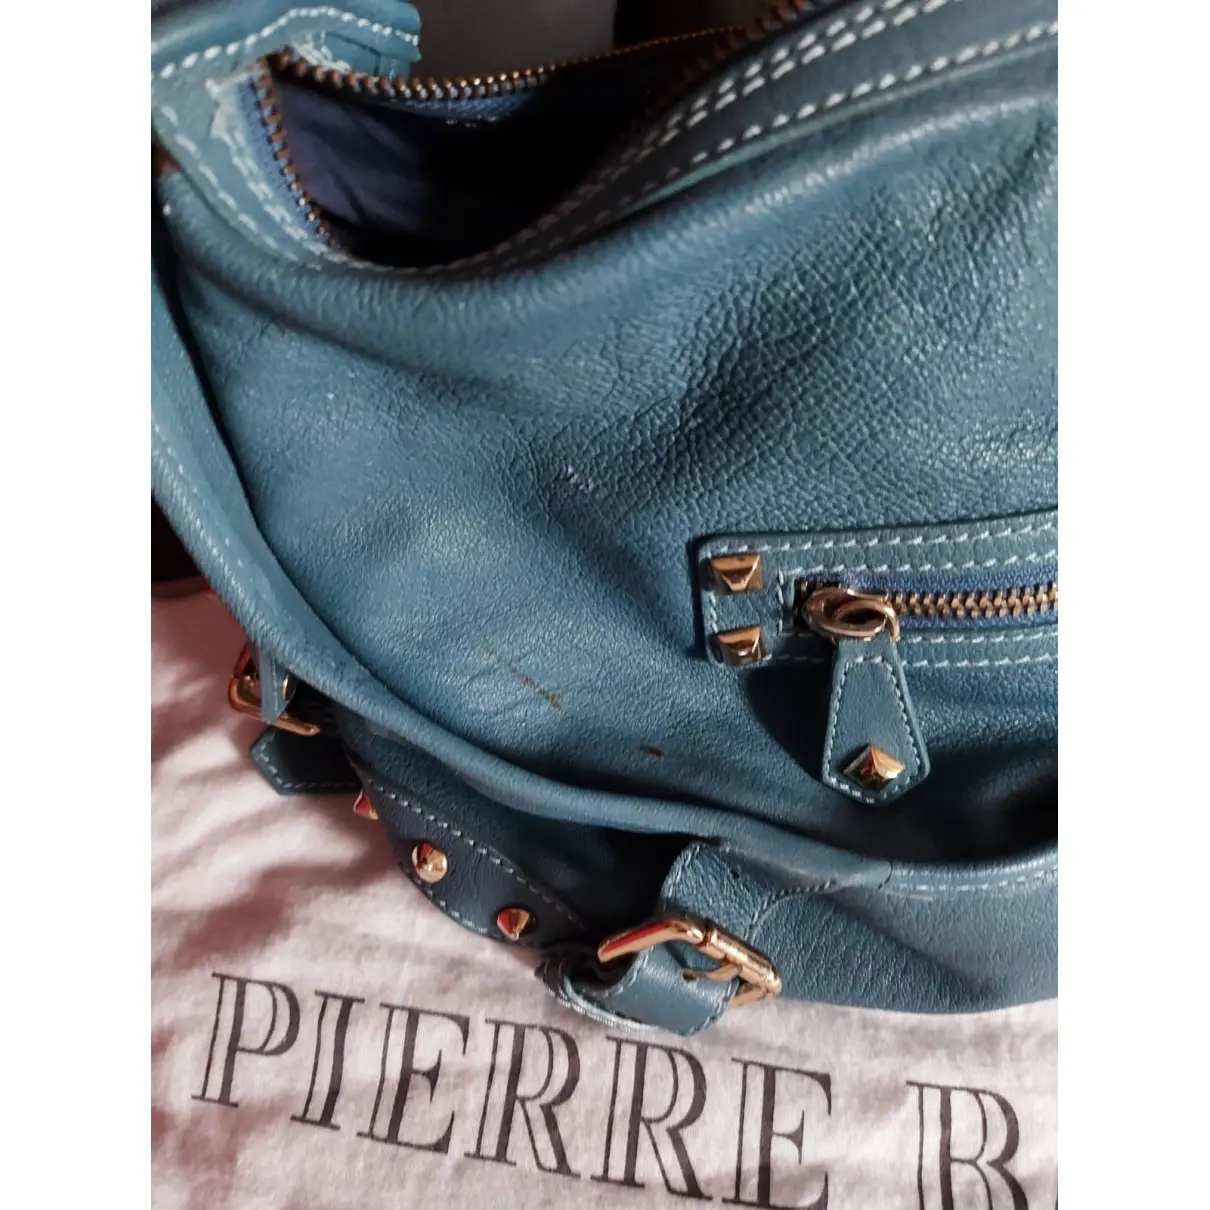 Buy Pierre Balmain Leather handbag online - Vintage